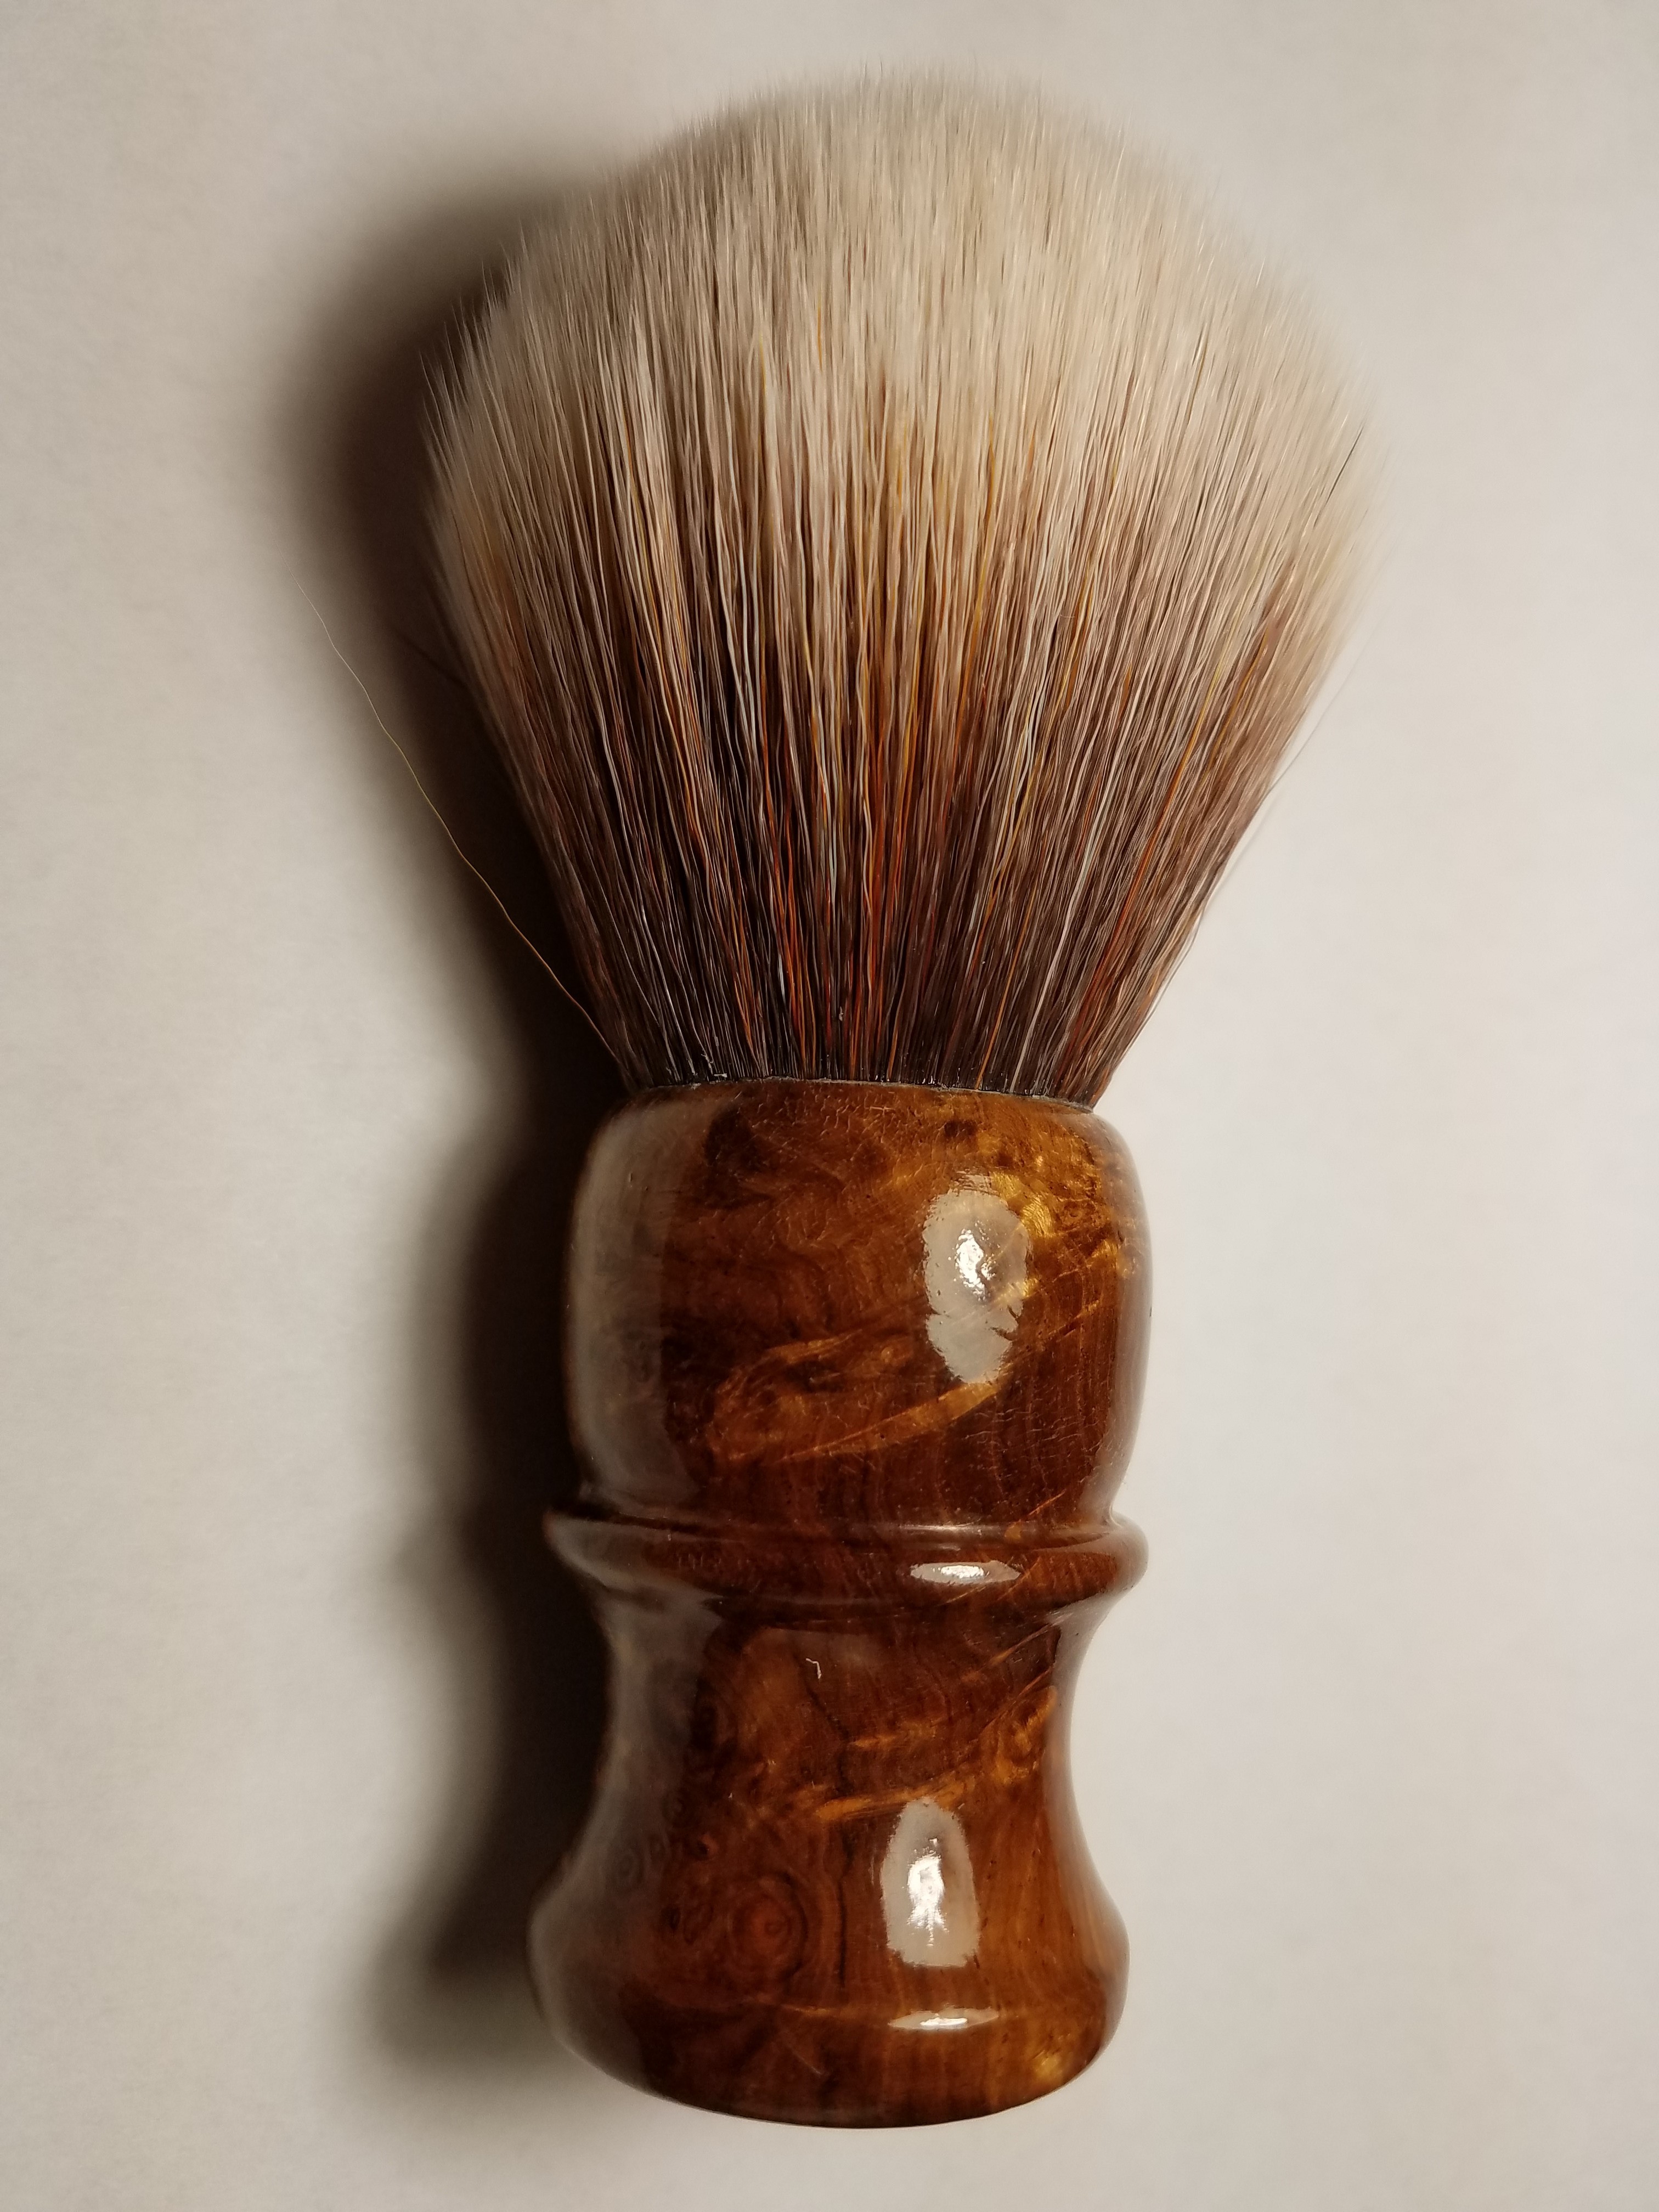 SynBad mesquite burl brush 13OCT2018 (2).jpg